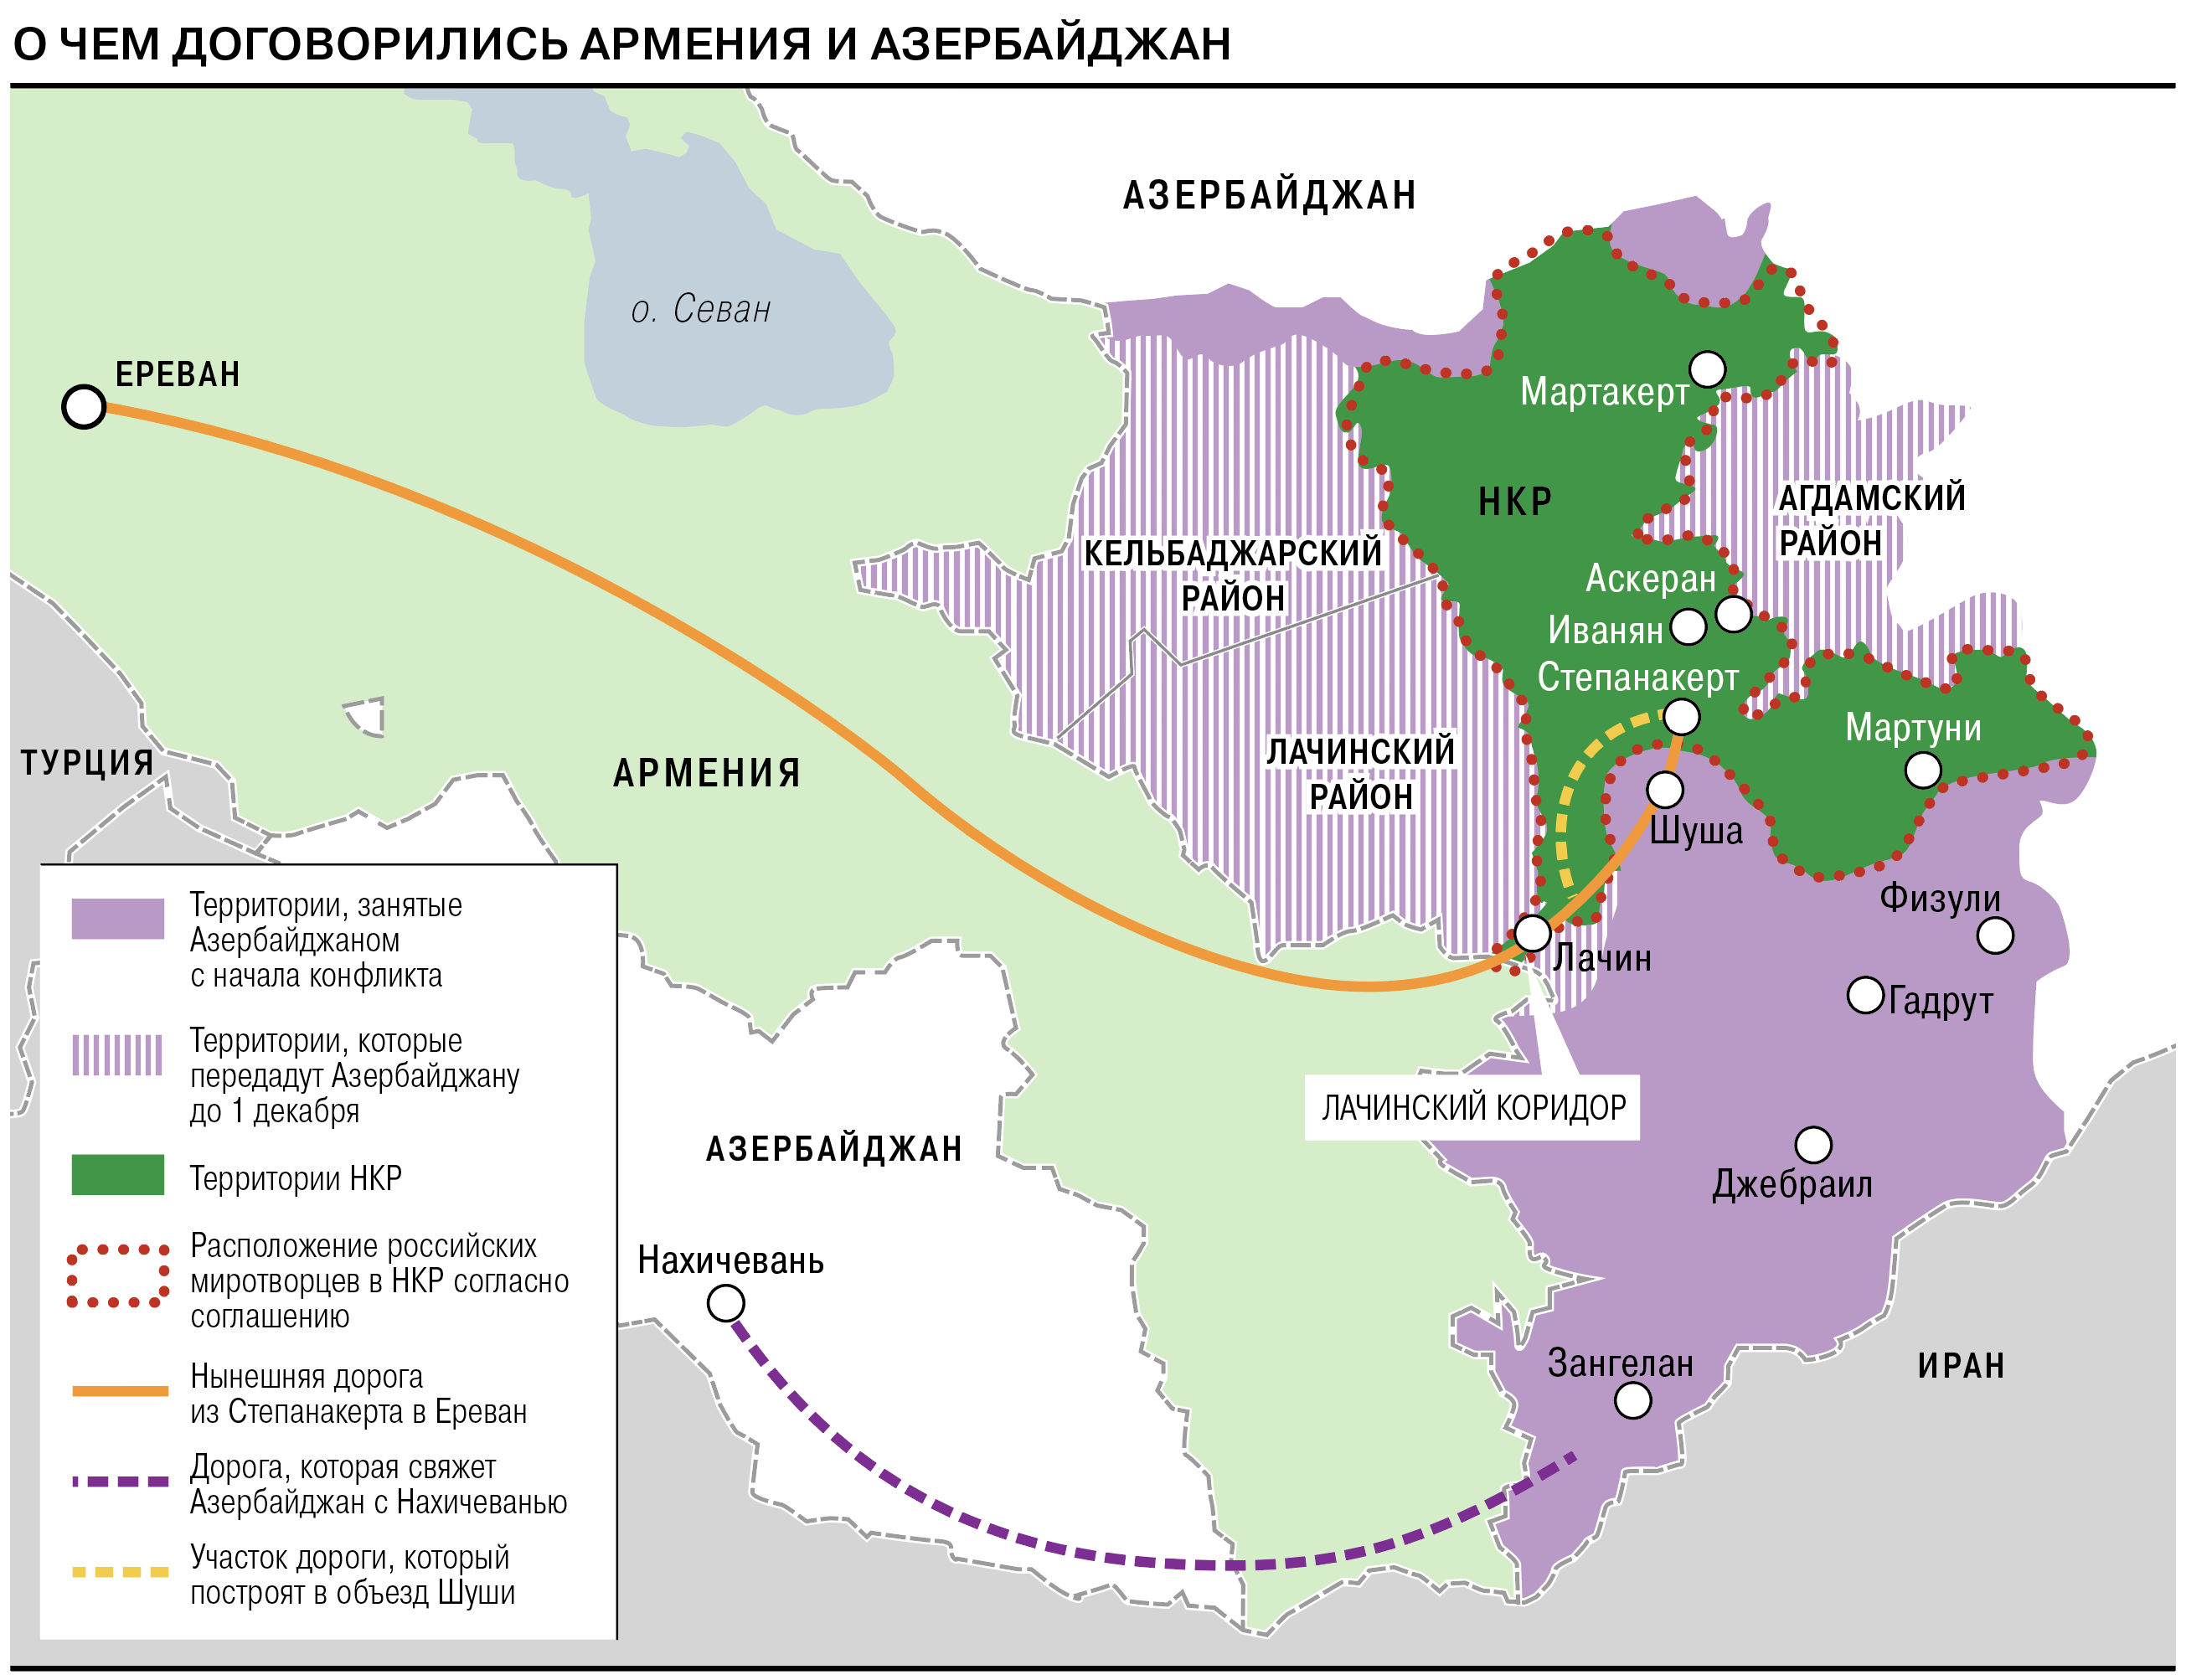 Карта Карабаха после войны 2020. Конфликт в Нагорном Карабахе 2020 карта. Территория азербайджана на карте